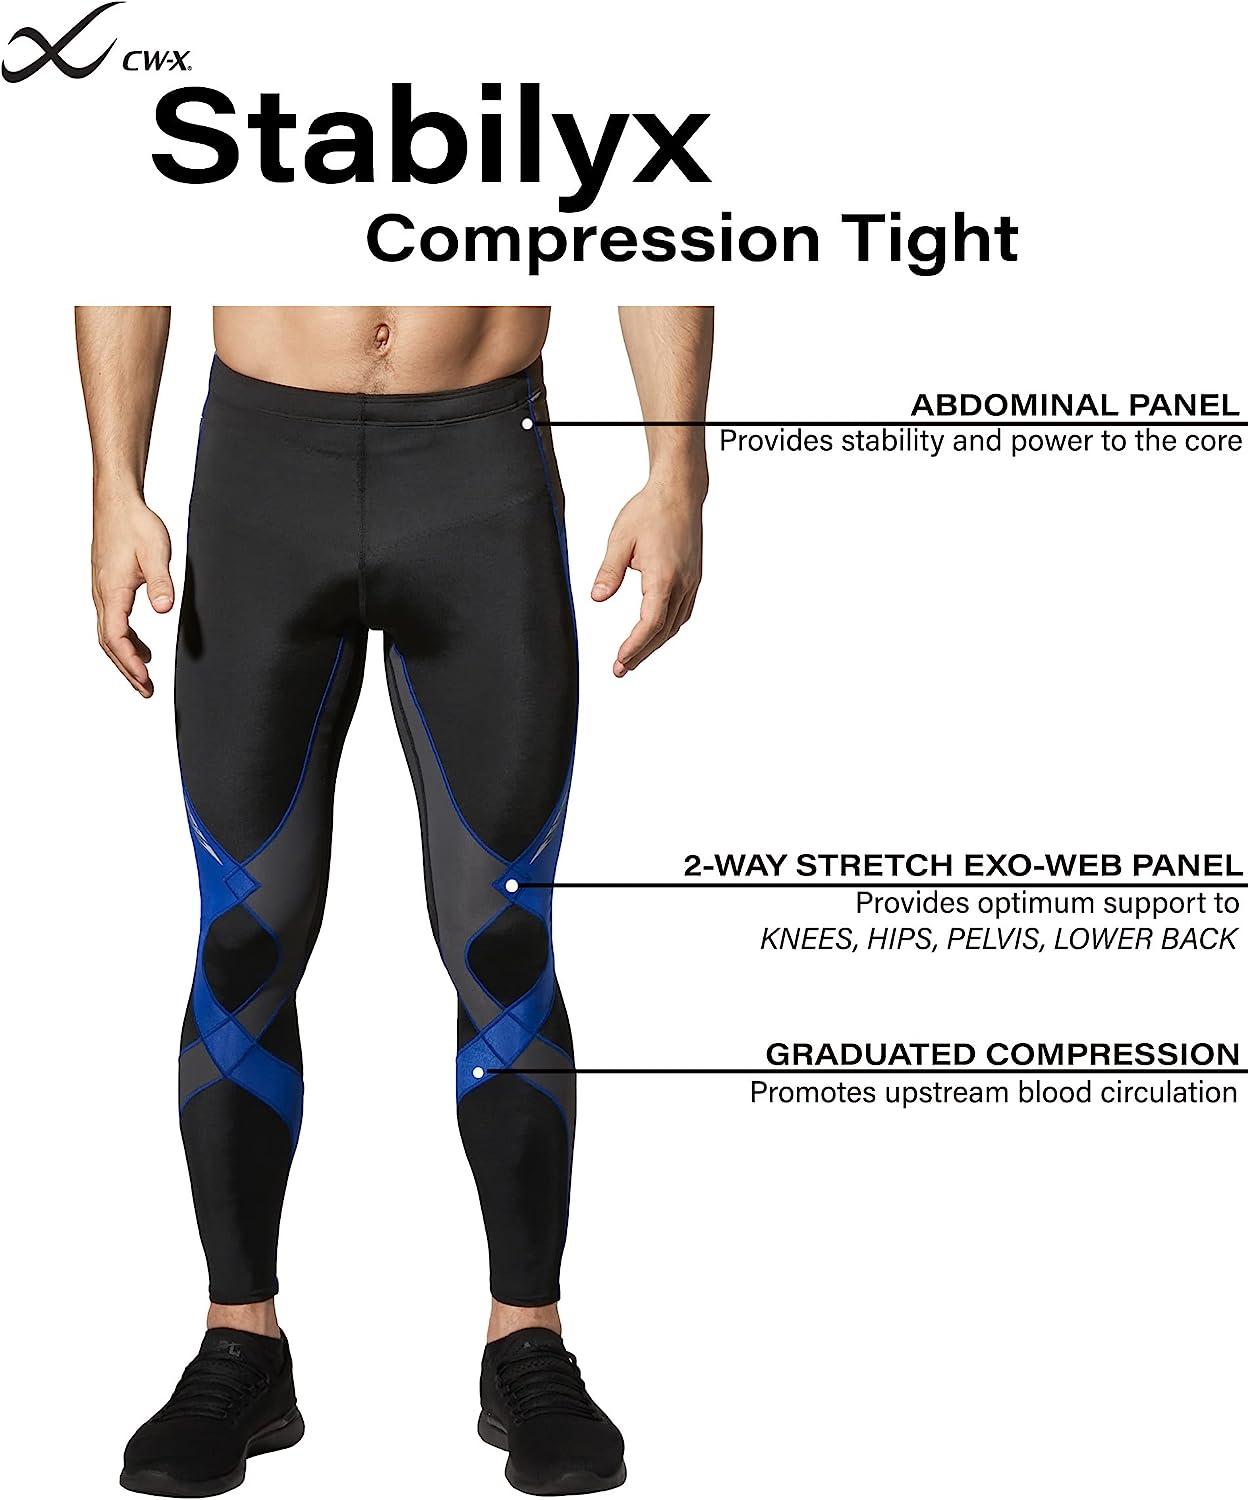 CW-X Men's Stabilyx Joint Support Compression Tights Medium Black/Grey/Blue